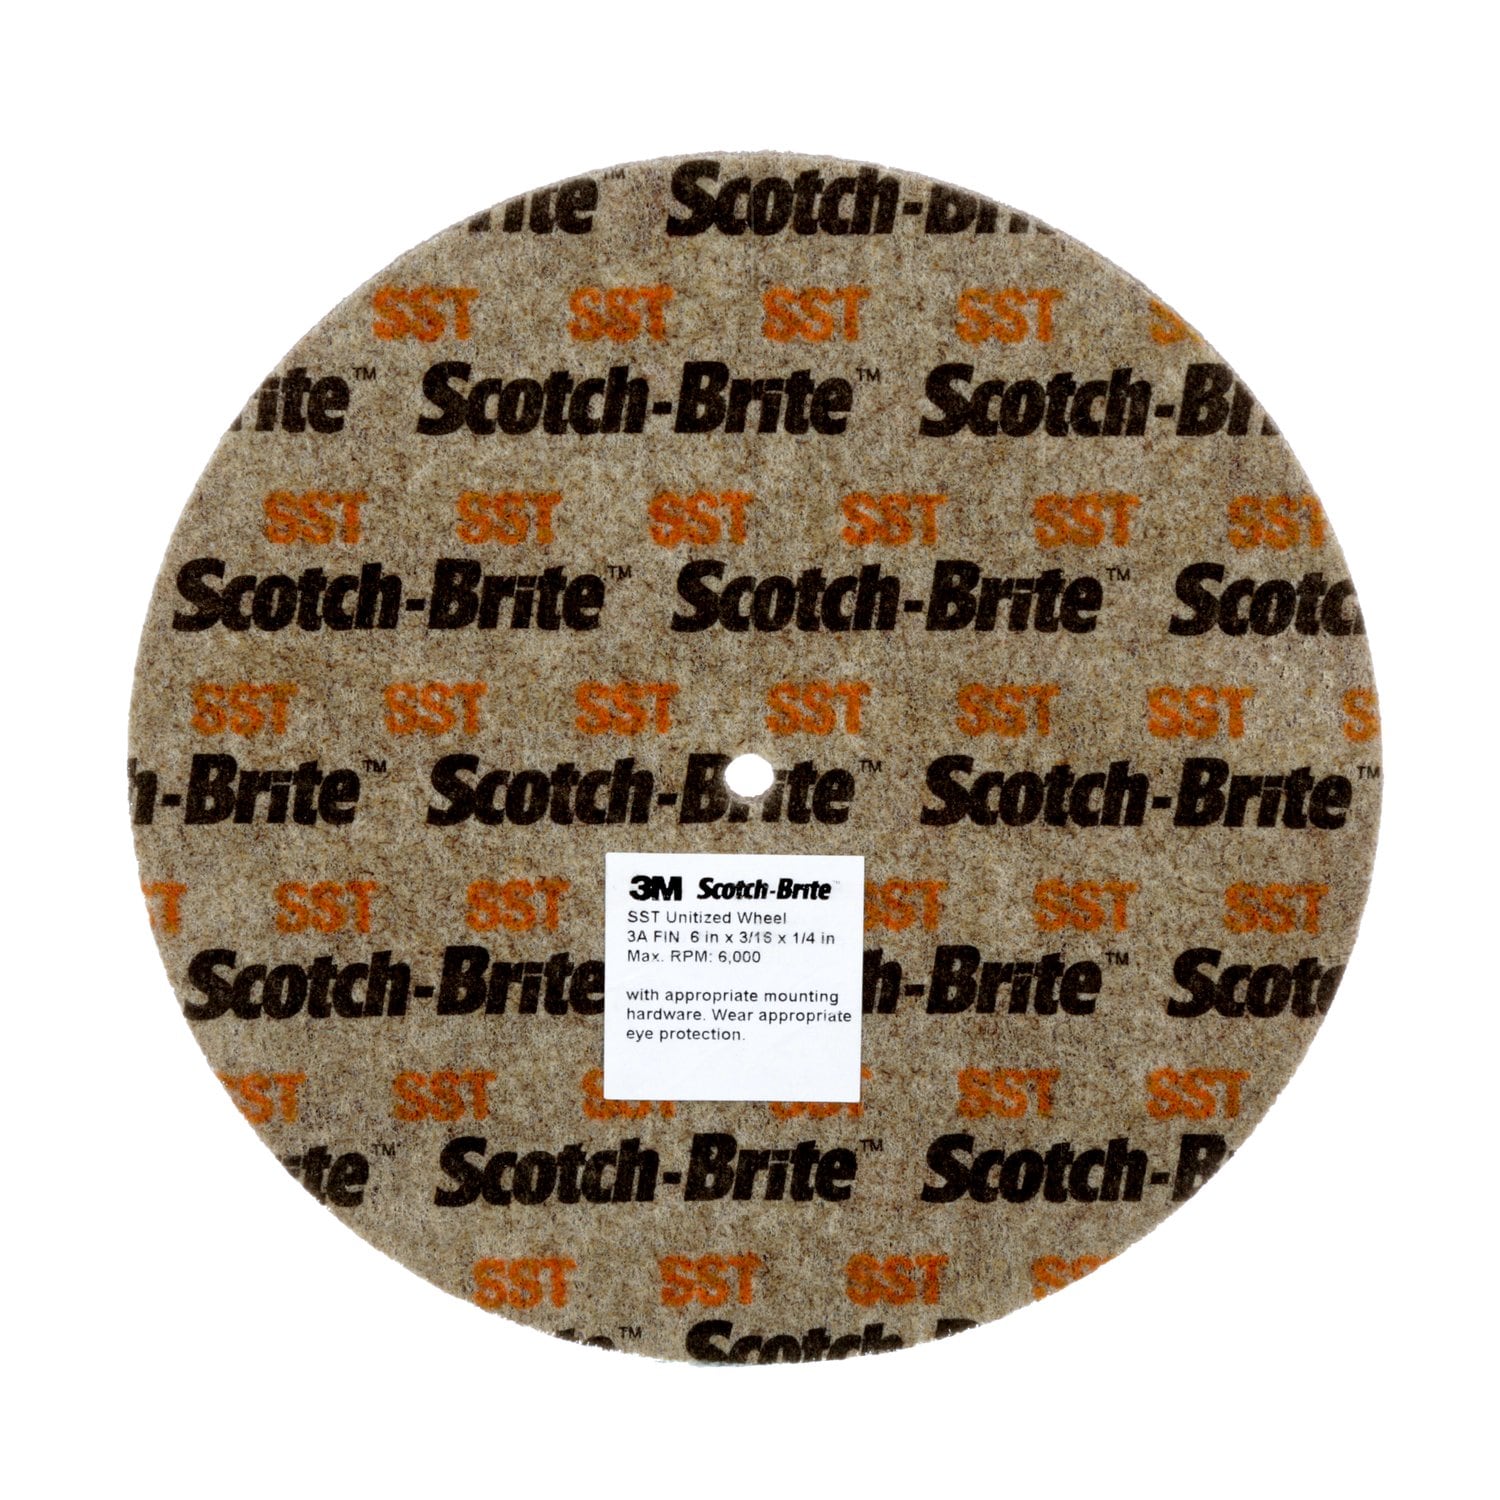 7100051629 - Scotch-Brite SST Unitized Wheel, ST-UW, 5A Fine, 1/2 in, Config